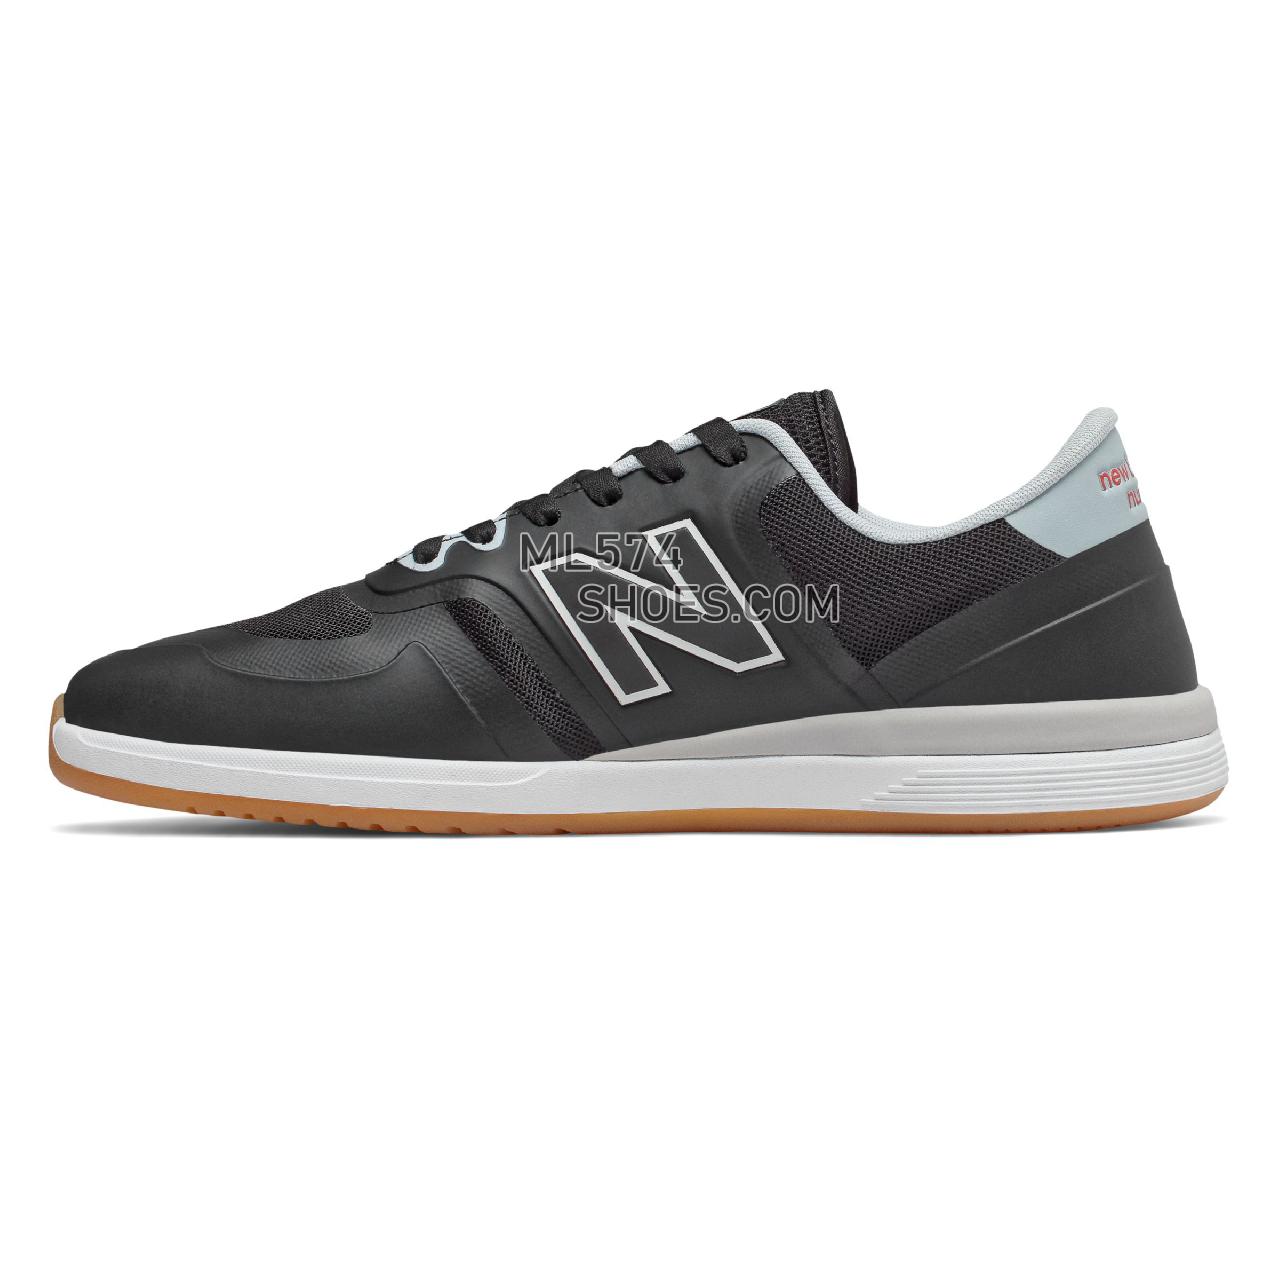 New Balance Numeric 420 - Men's NB Numeric Skate - White with Black - NM420MOR